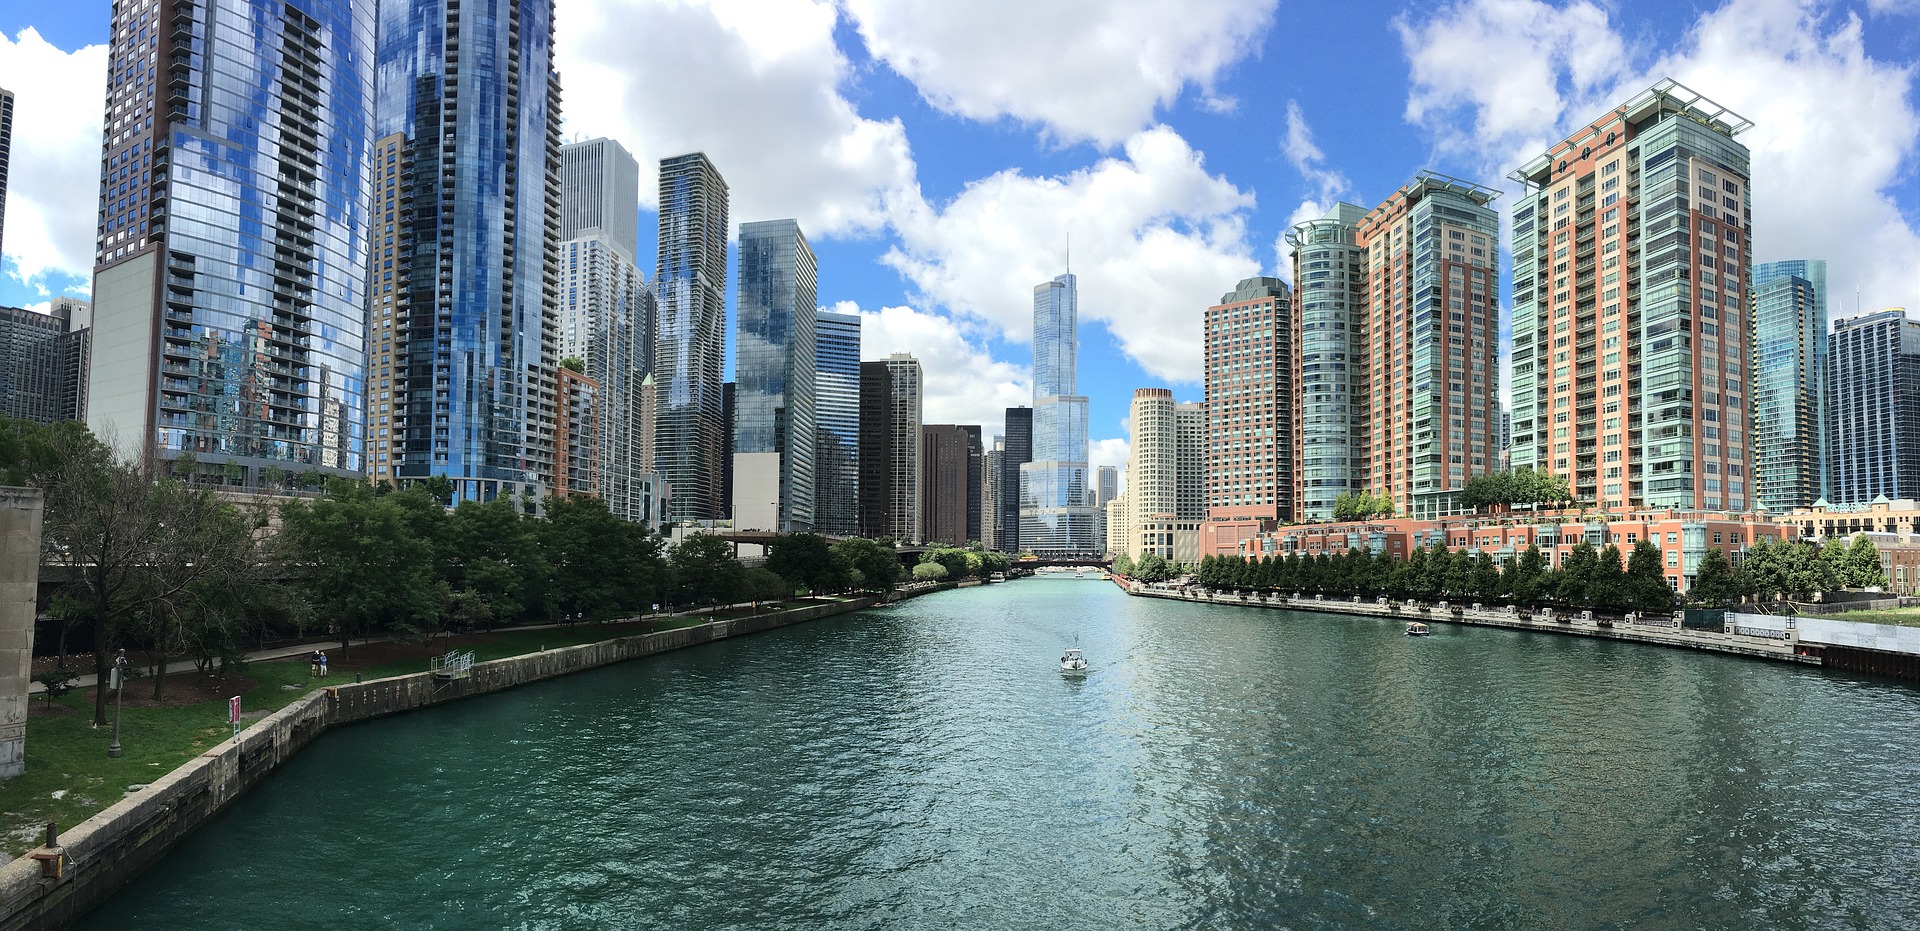 Chicago river_Pexels